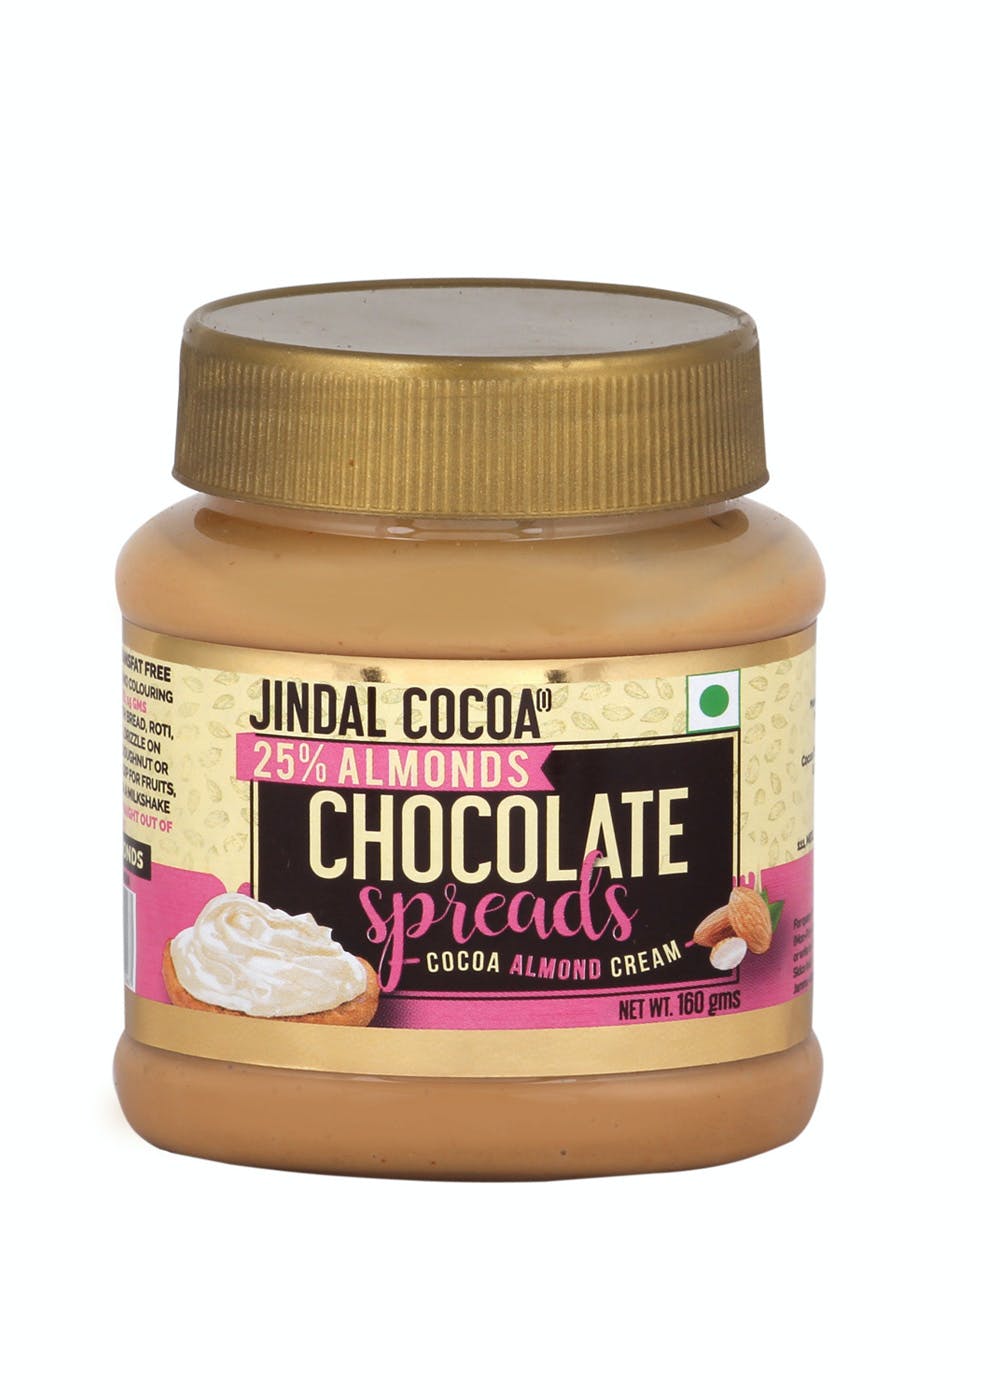 Jindal Cocoa